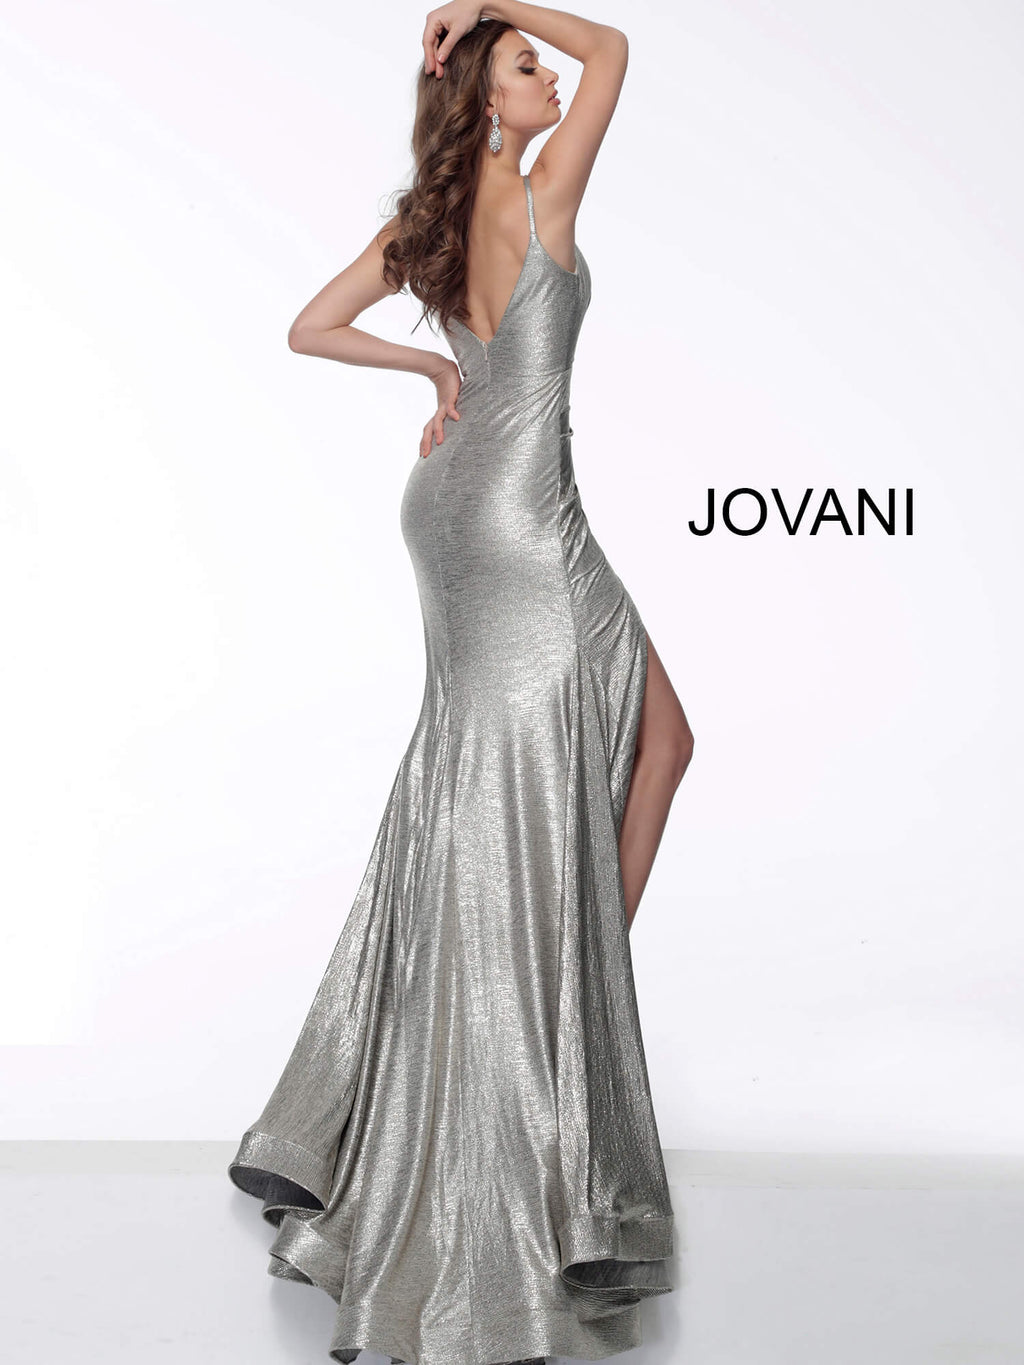 JOVANI 67977 V-Neck Front Slit Metallic Evening Dress - CYC Boutique